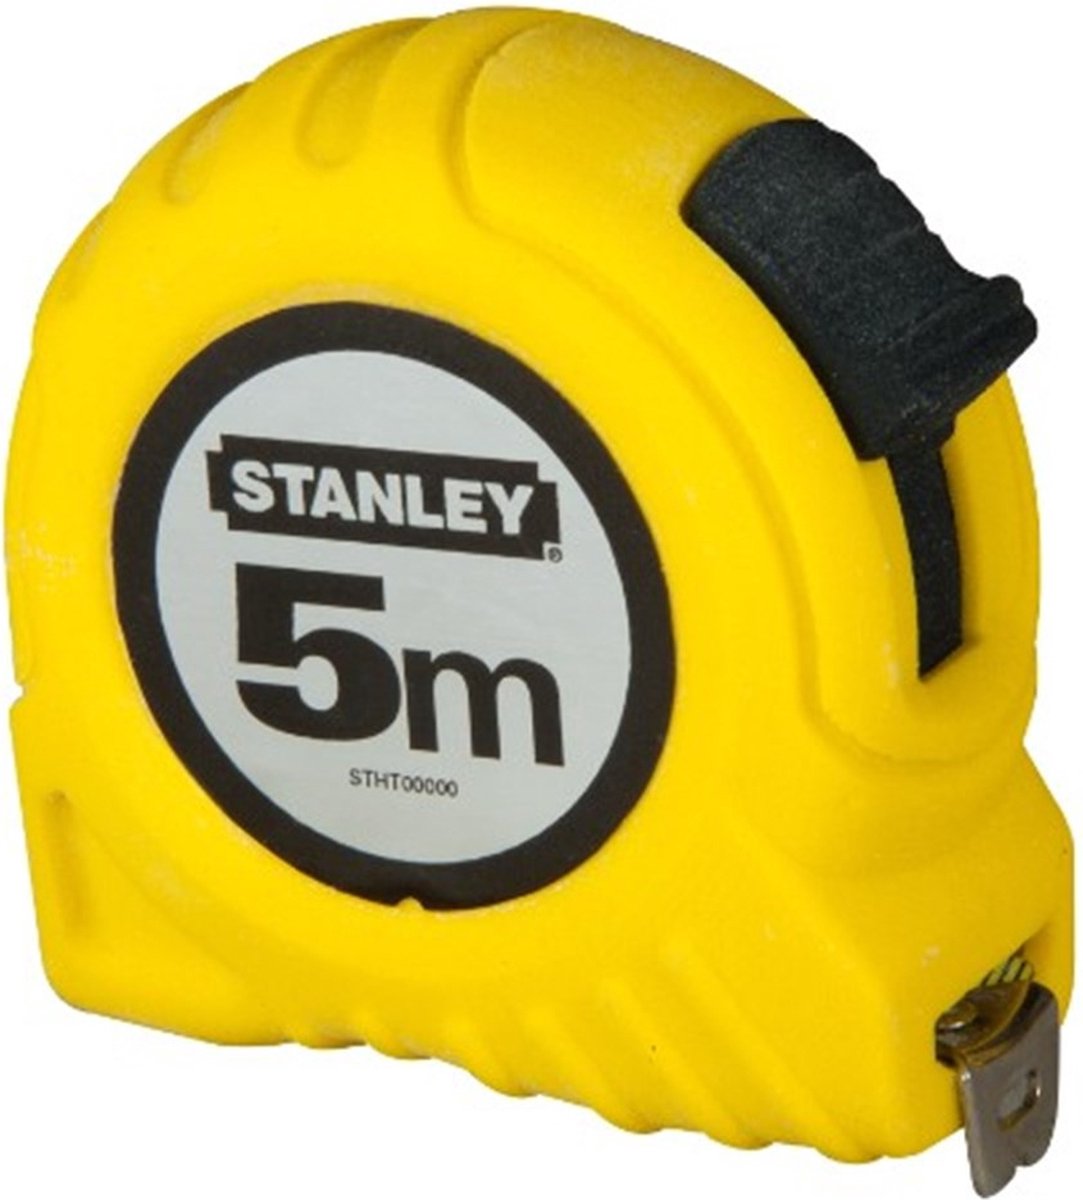 Stanley 1-30-497 Rolbandmaat 5m - 19mm - STANLEY